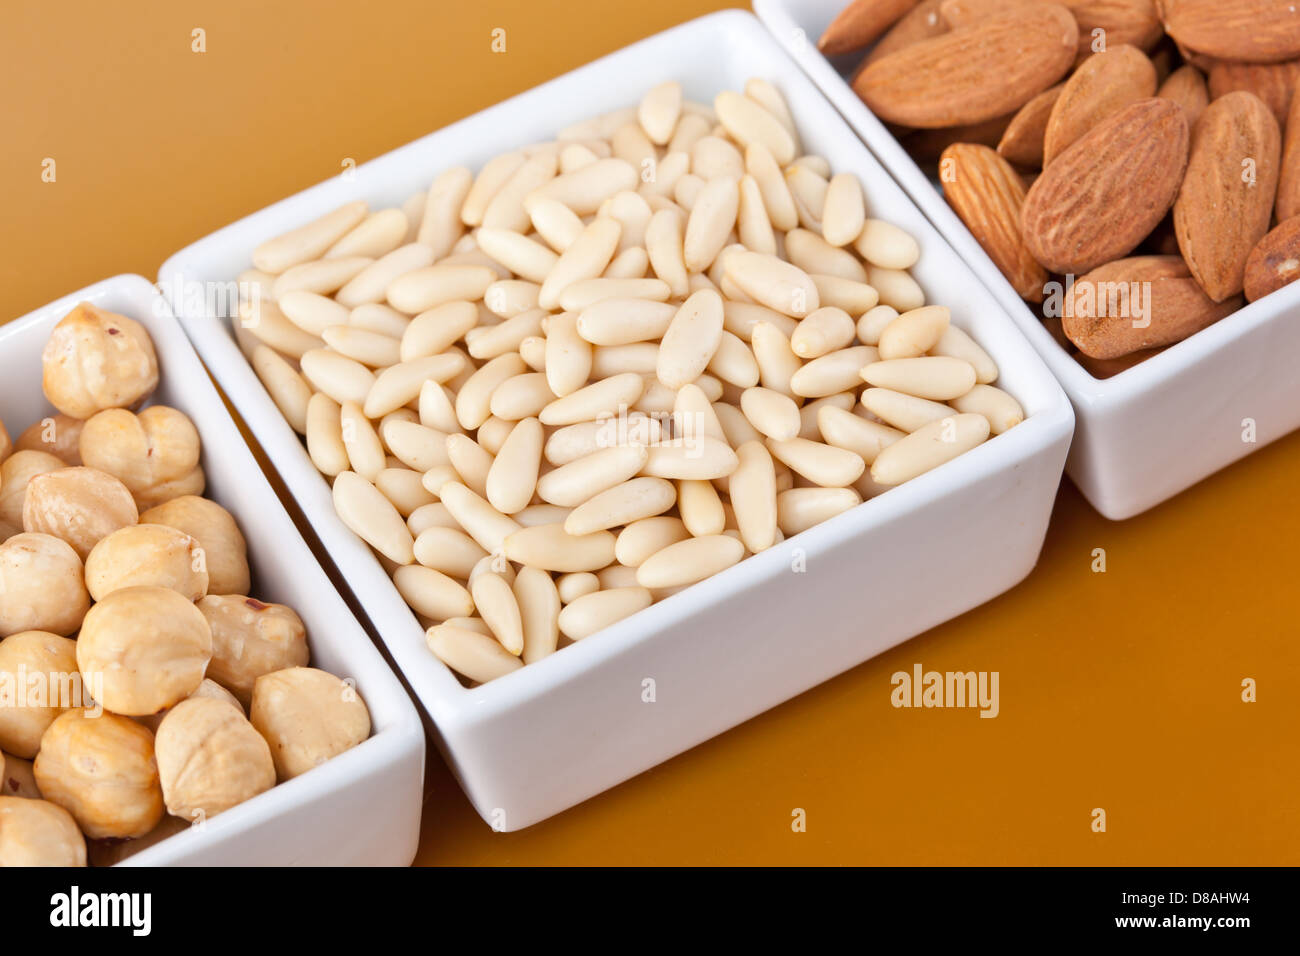 Peanuts aldons and hazelnuts unshelled Stock Photo